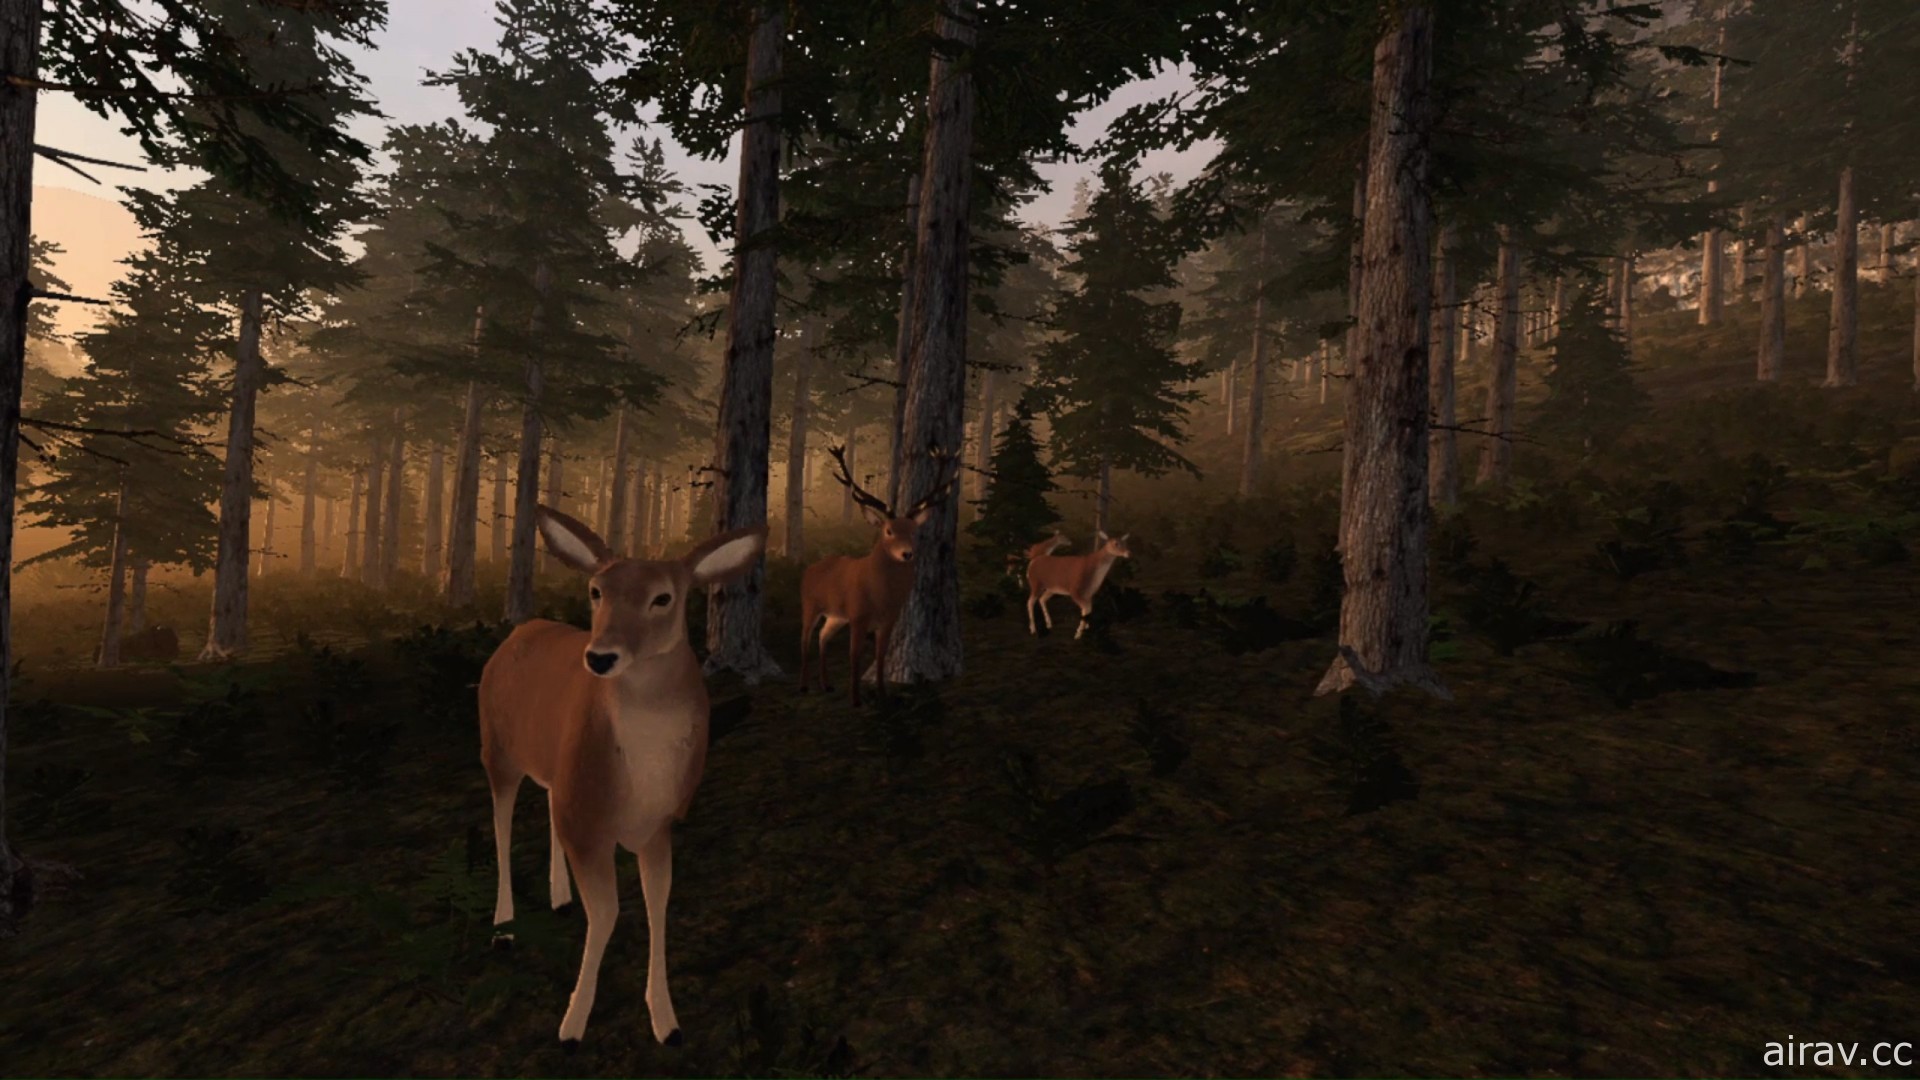 VR 新作《虚拟猎人》曝光 体验在广阔荒野上狩猎！